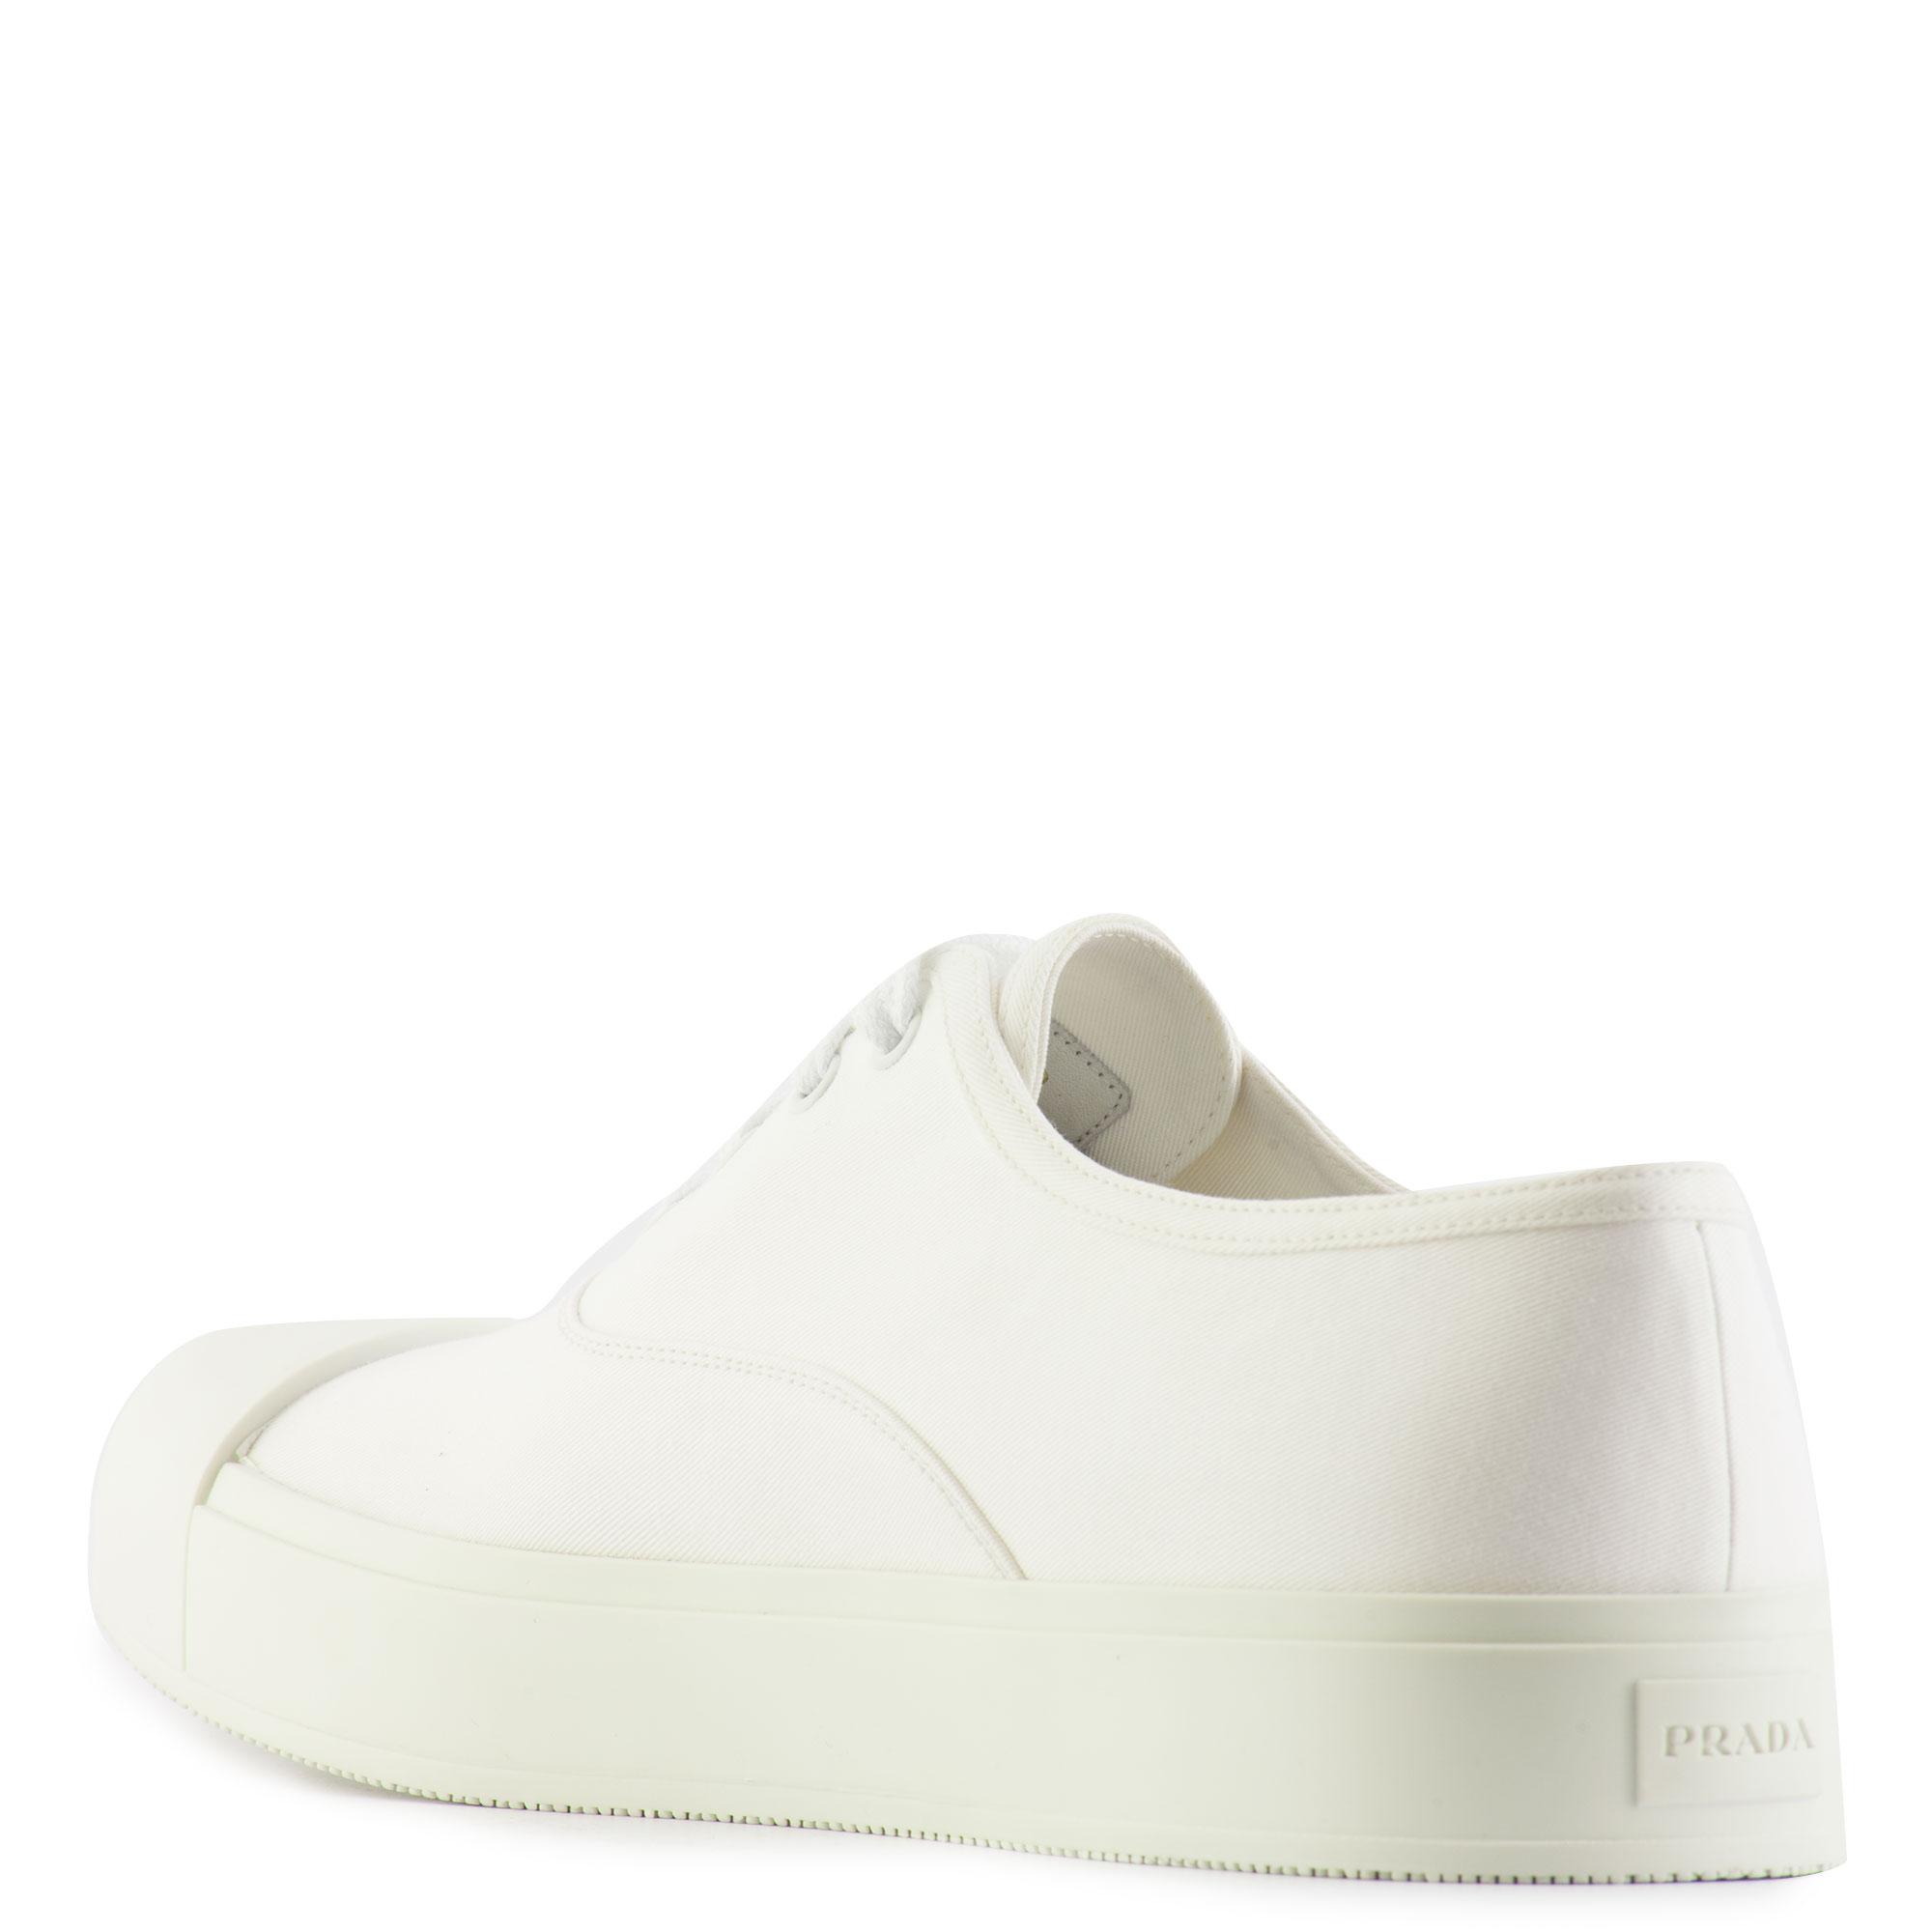 Lyst - Prada Cotton Sneakers in White for Men